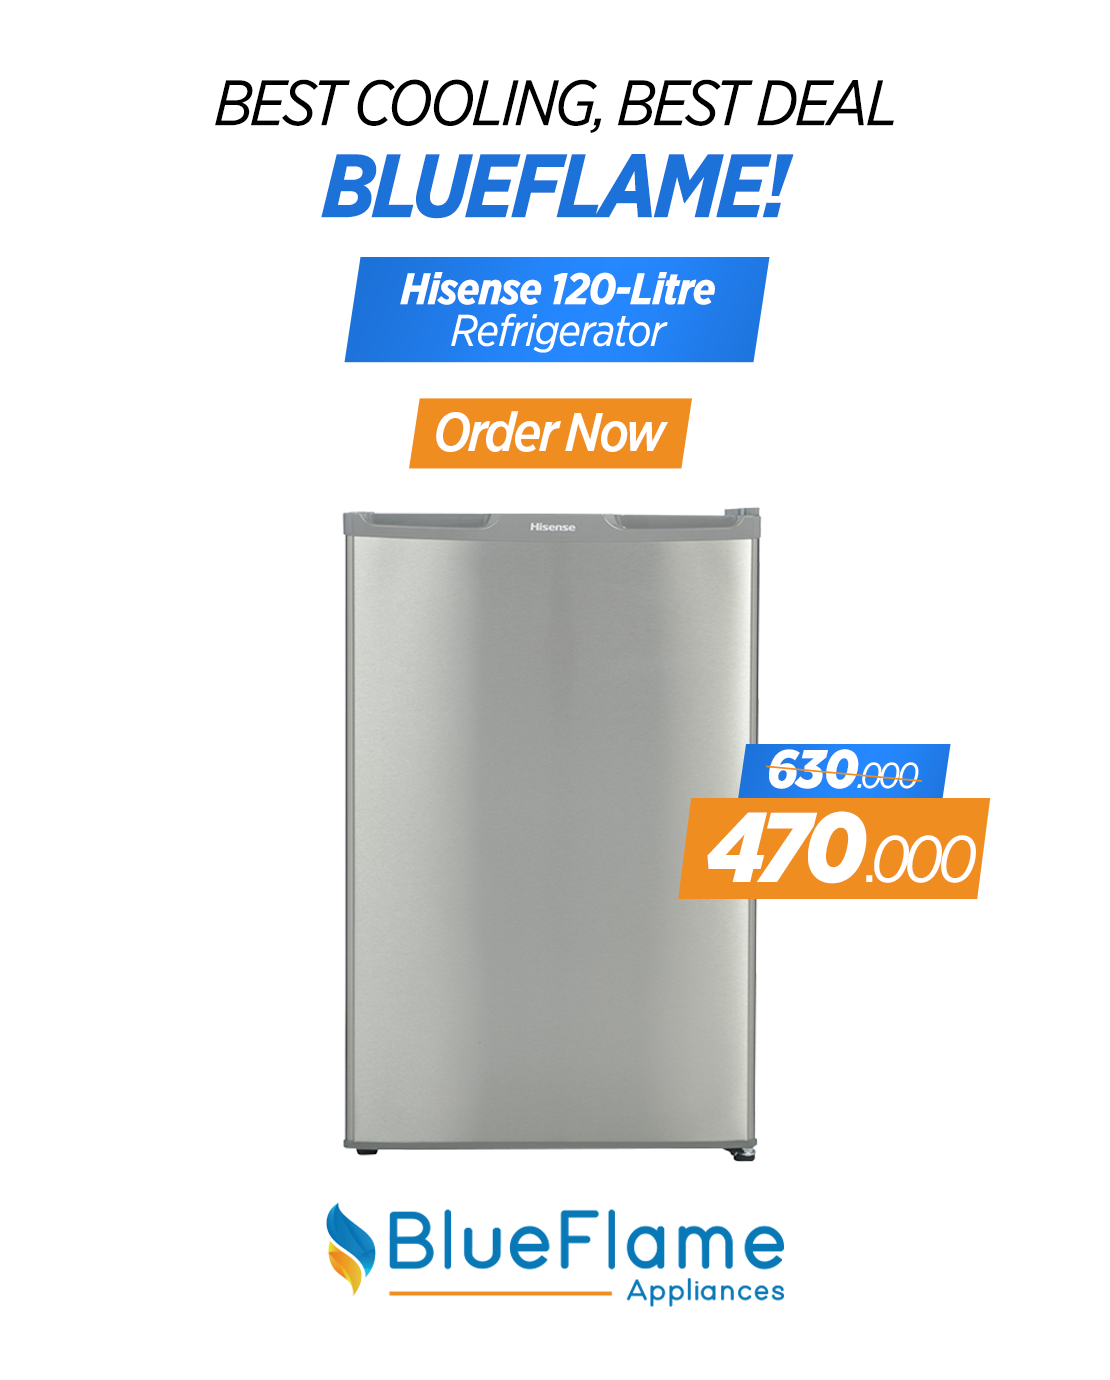 blueflame-web-mobil2